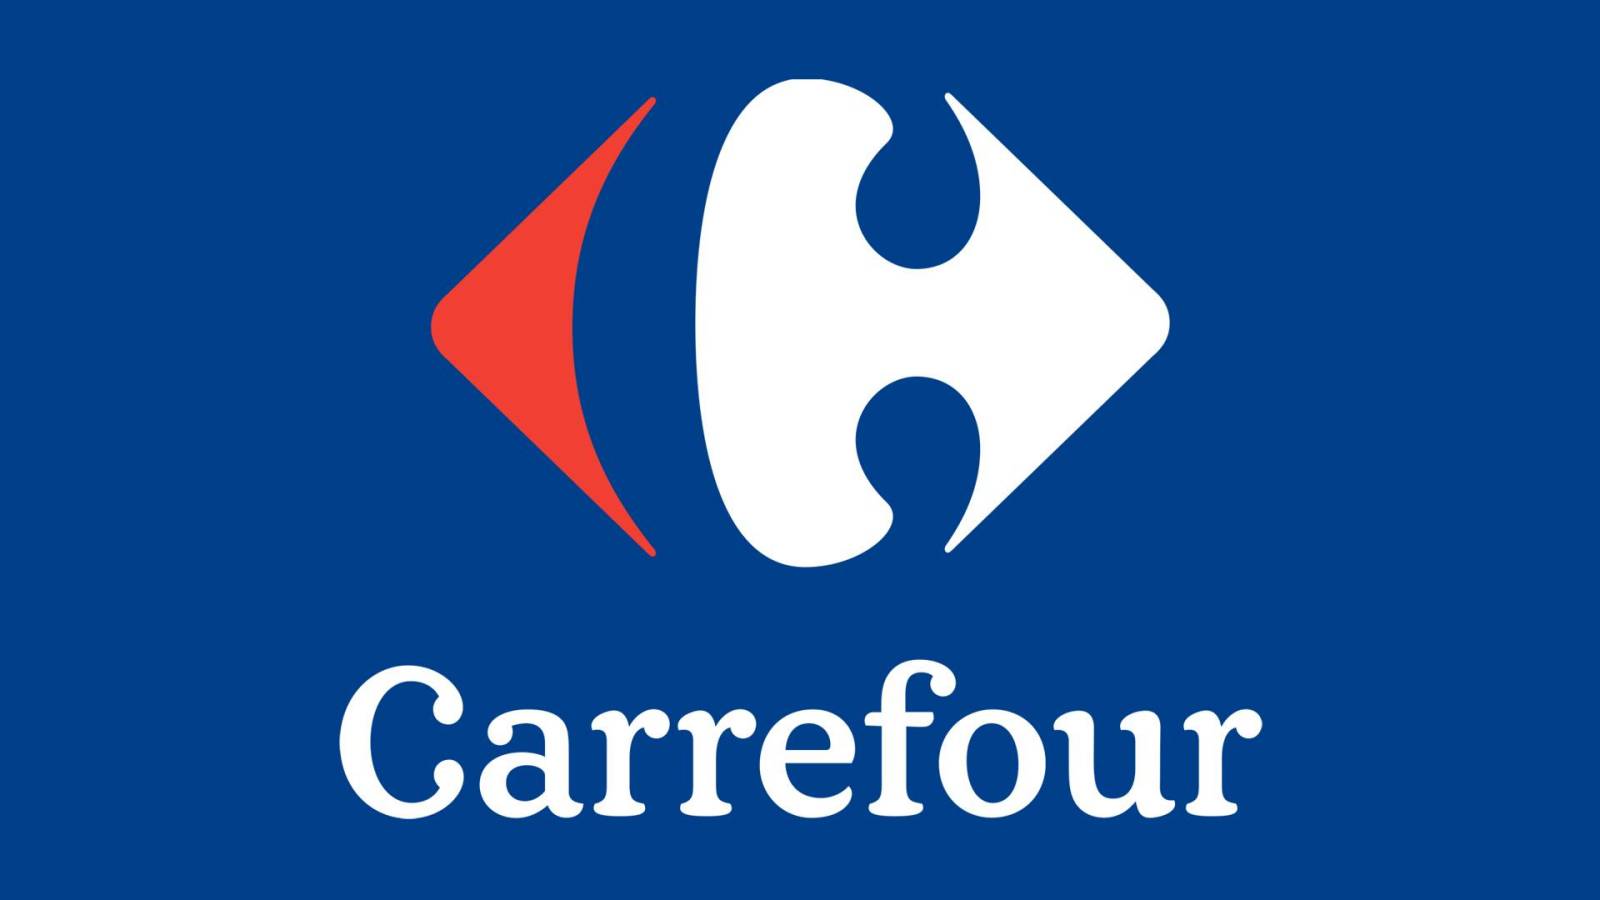 Carrefour Vestea Grozava Offers FREE to Romanian Customers